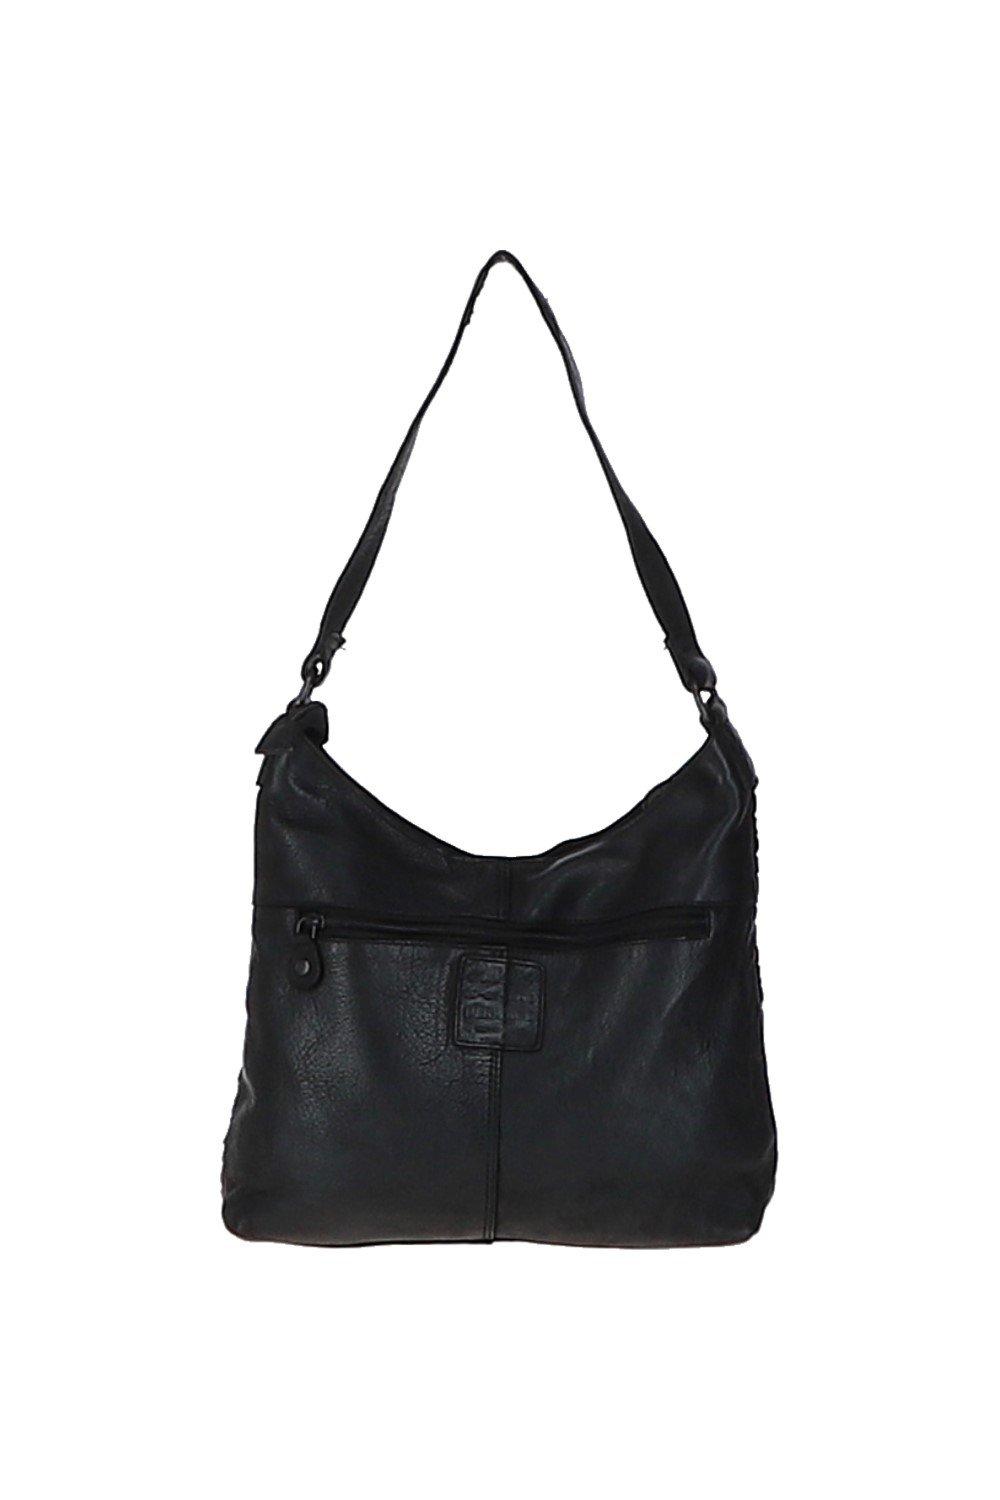 Collection @ Debenhams medium soft black leather double sided shoulder bag